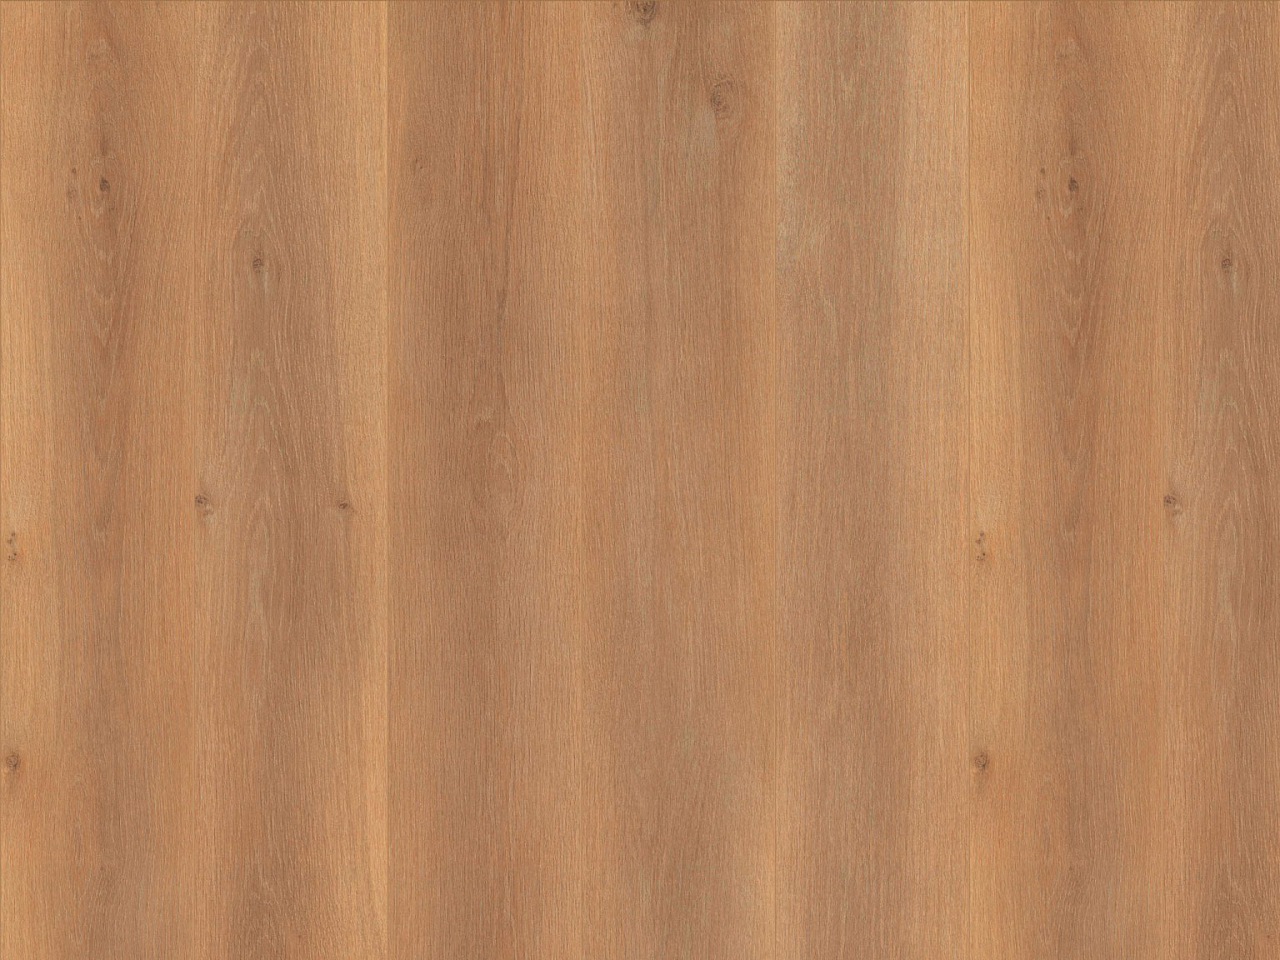 Laminatboden Oak Gallery Format M – Calm Oak brown, MV4166